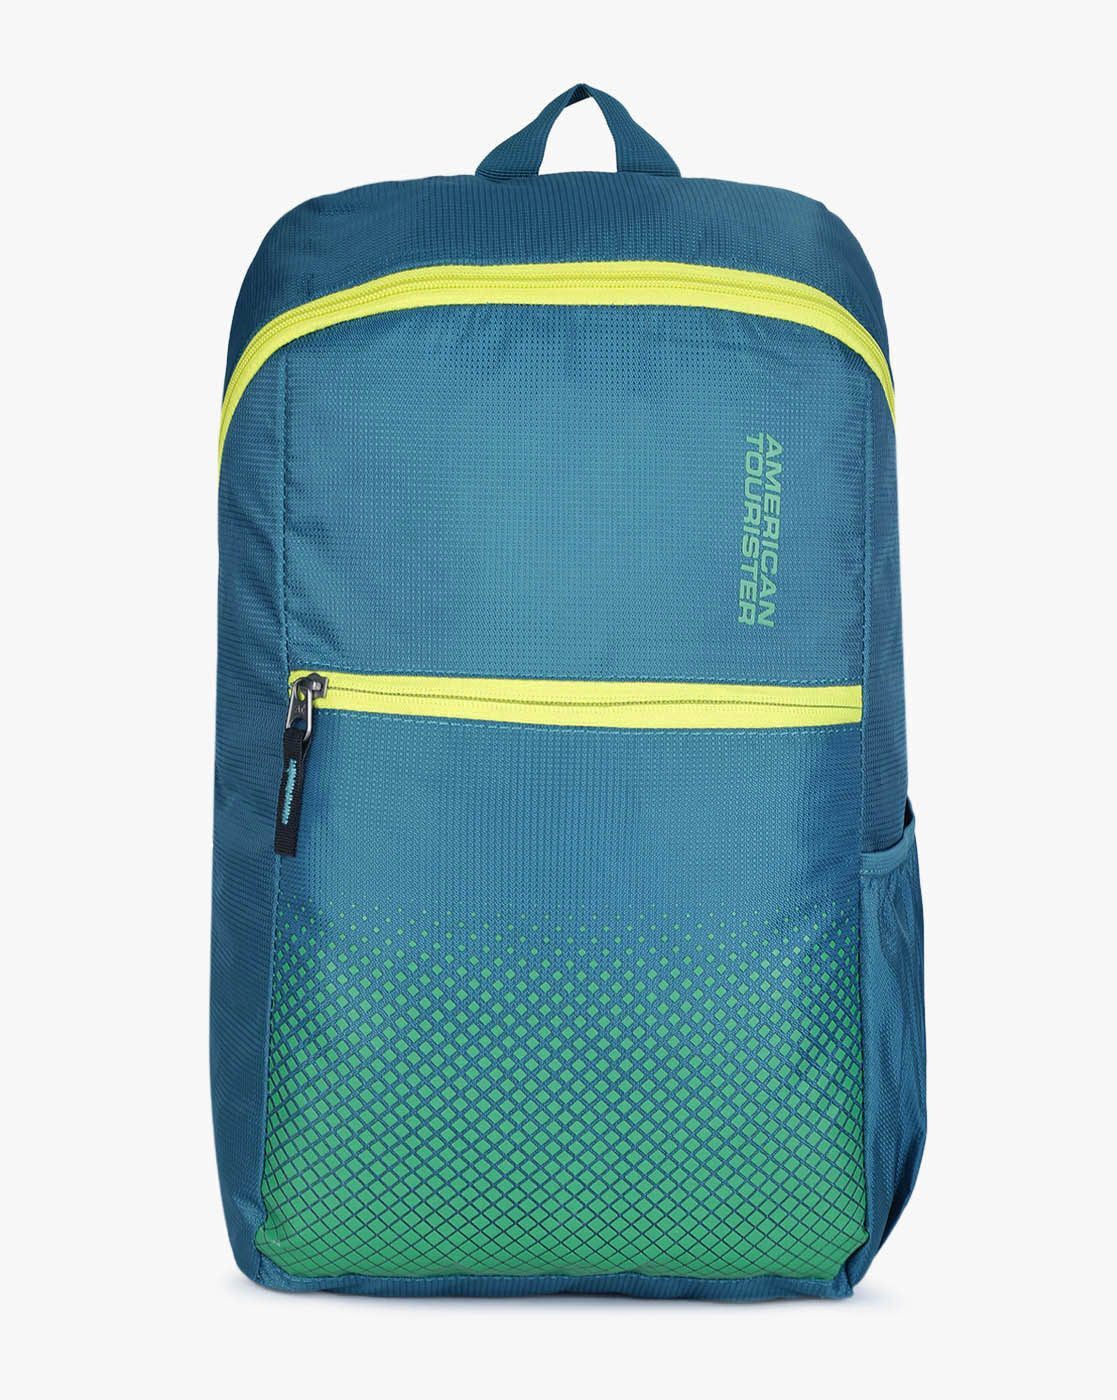 UpBeat Backpack Zip Aqua Green | Rolling Luggage UK